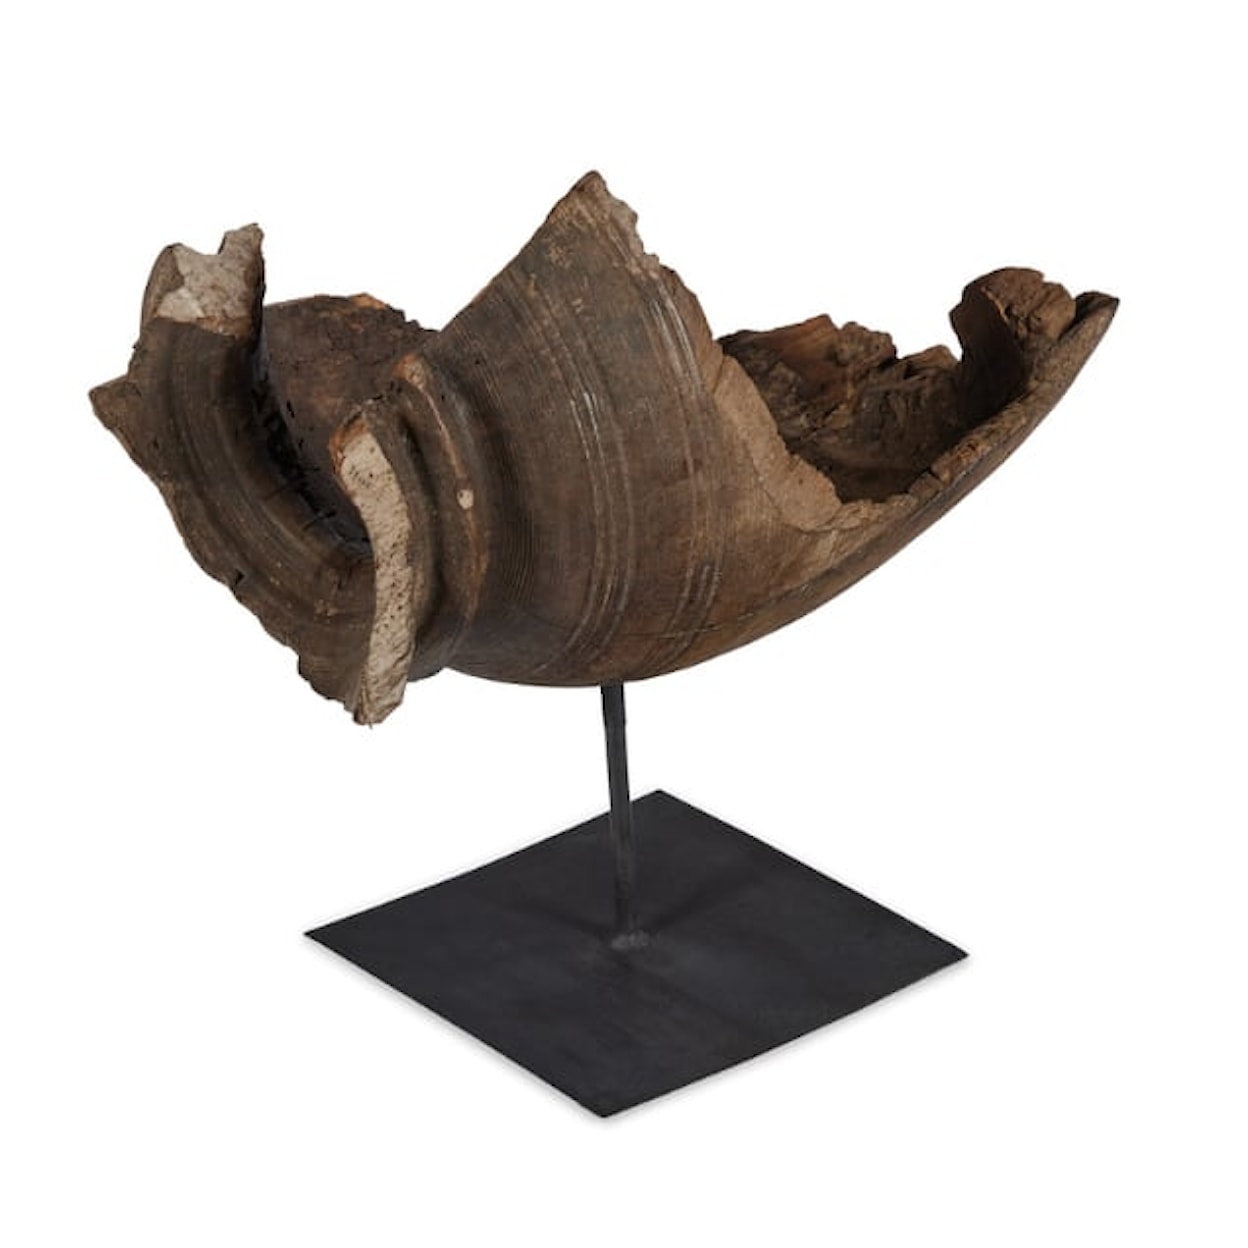 BOBO Intriguing Objects Accessory Wooden Broken Pots